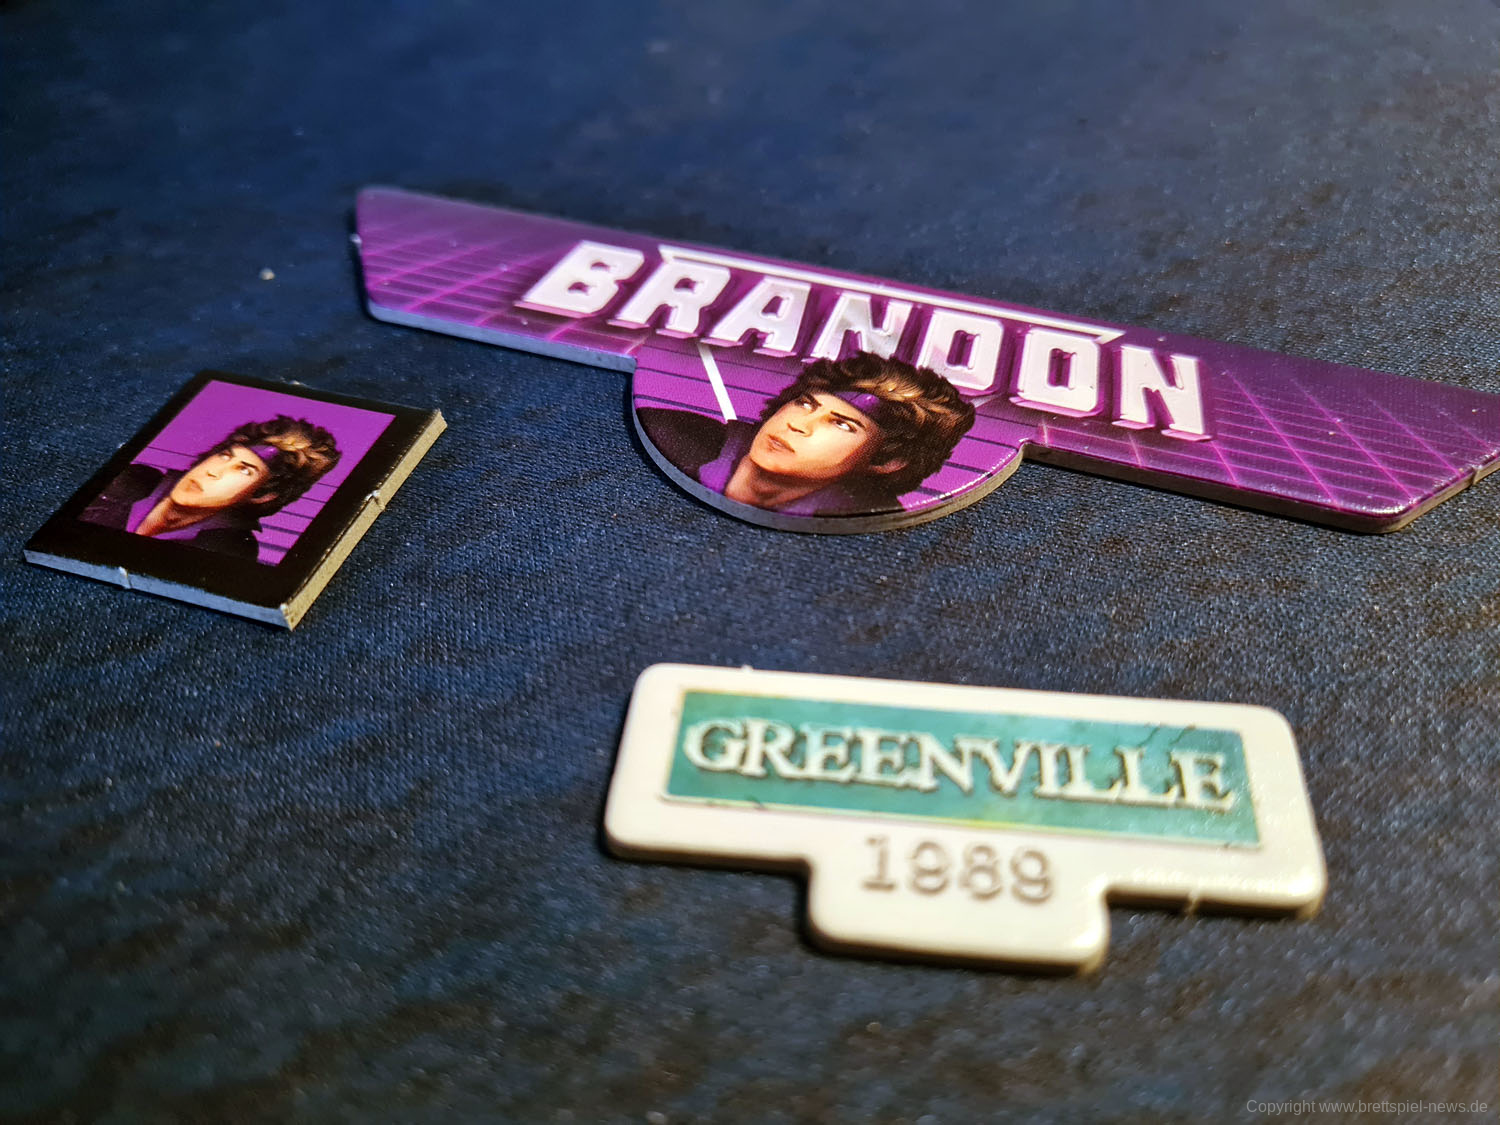 greenville 1989 103